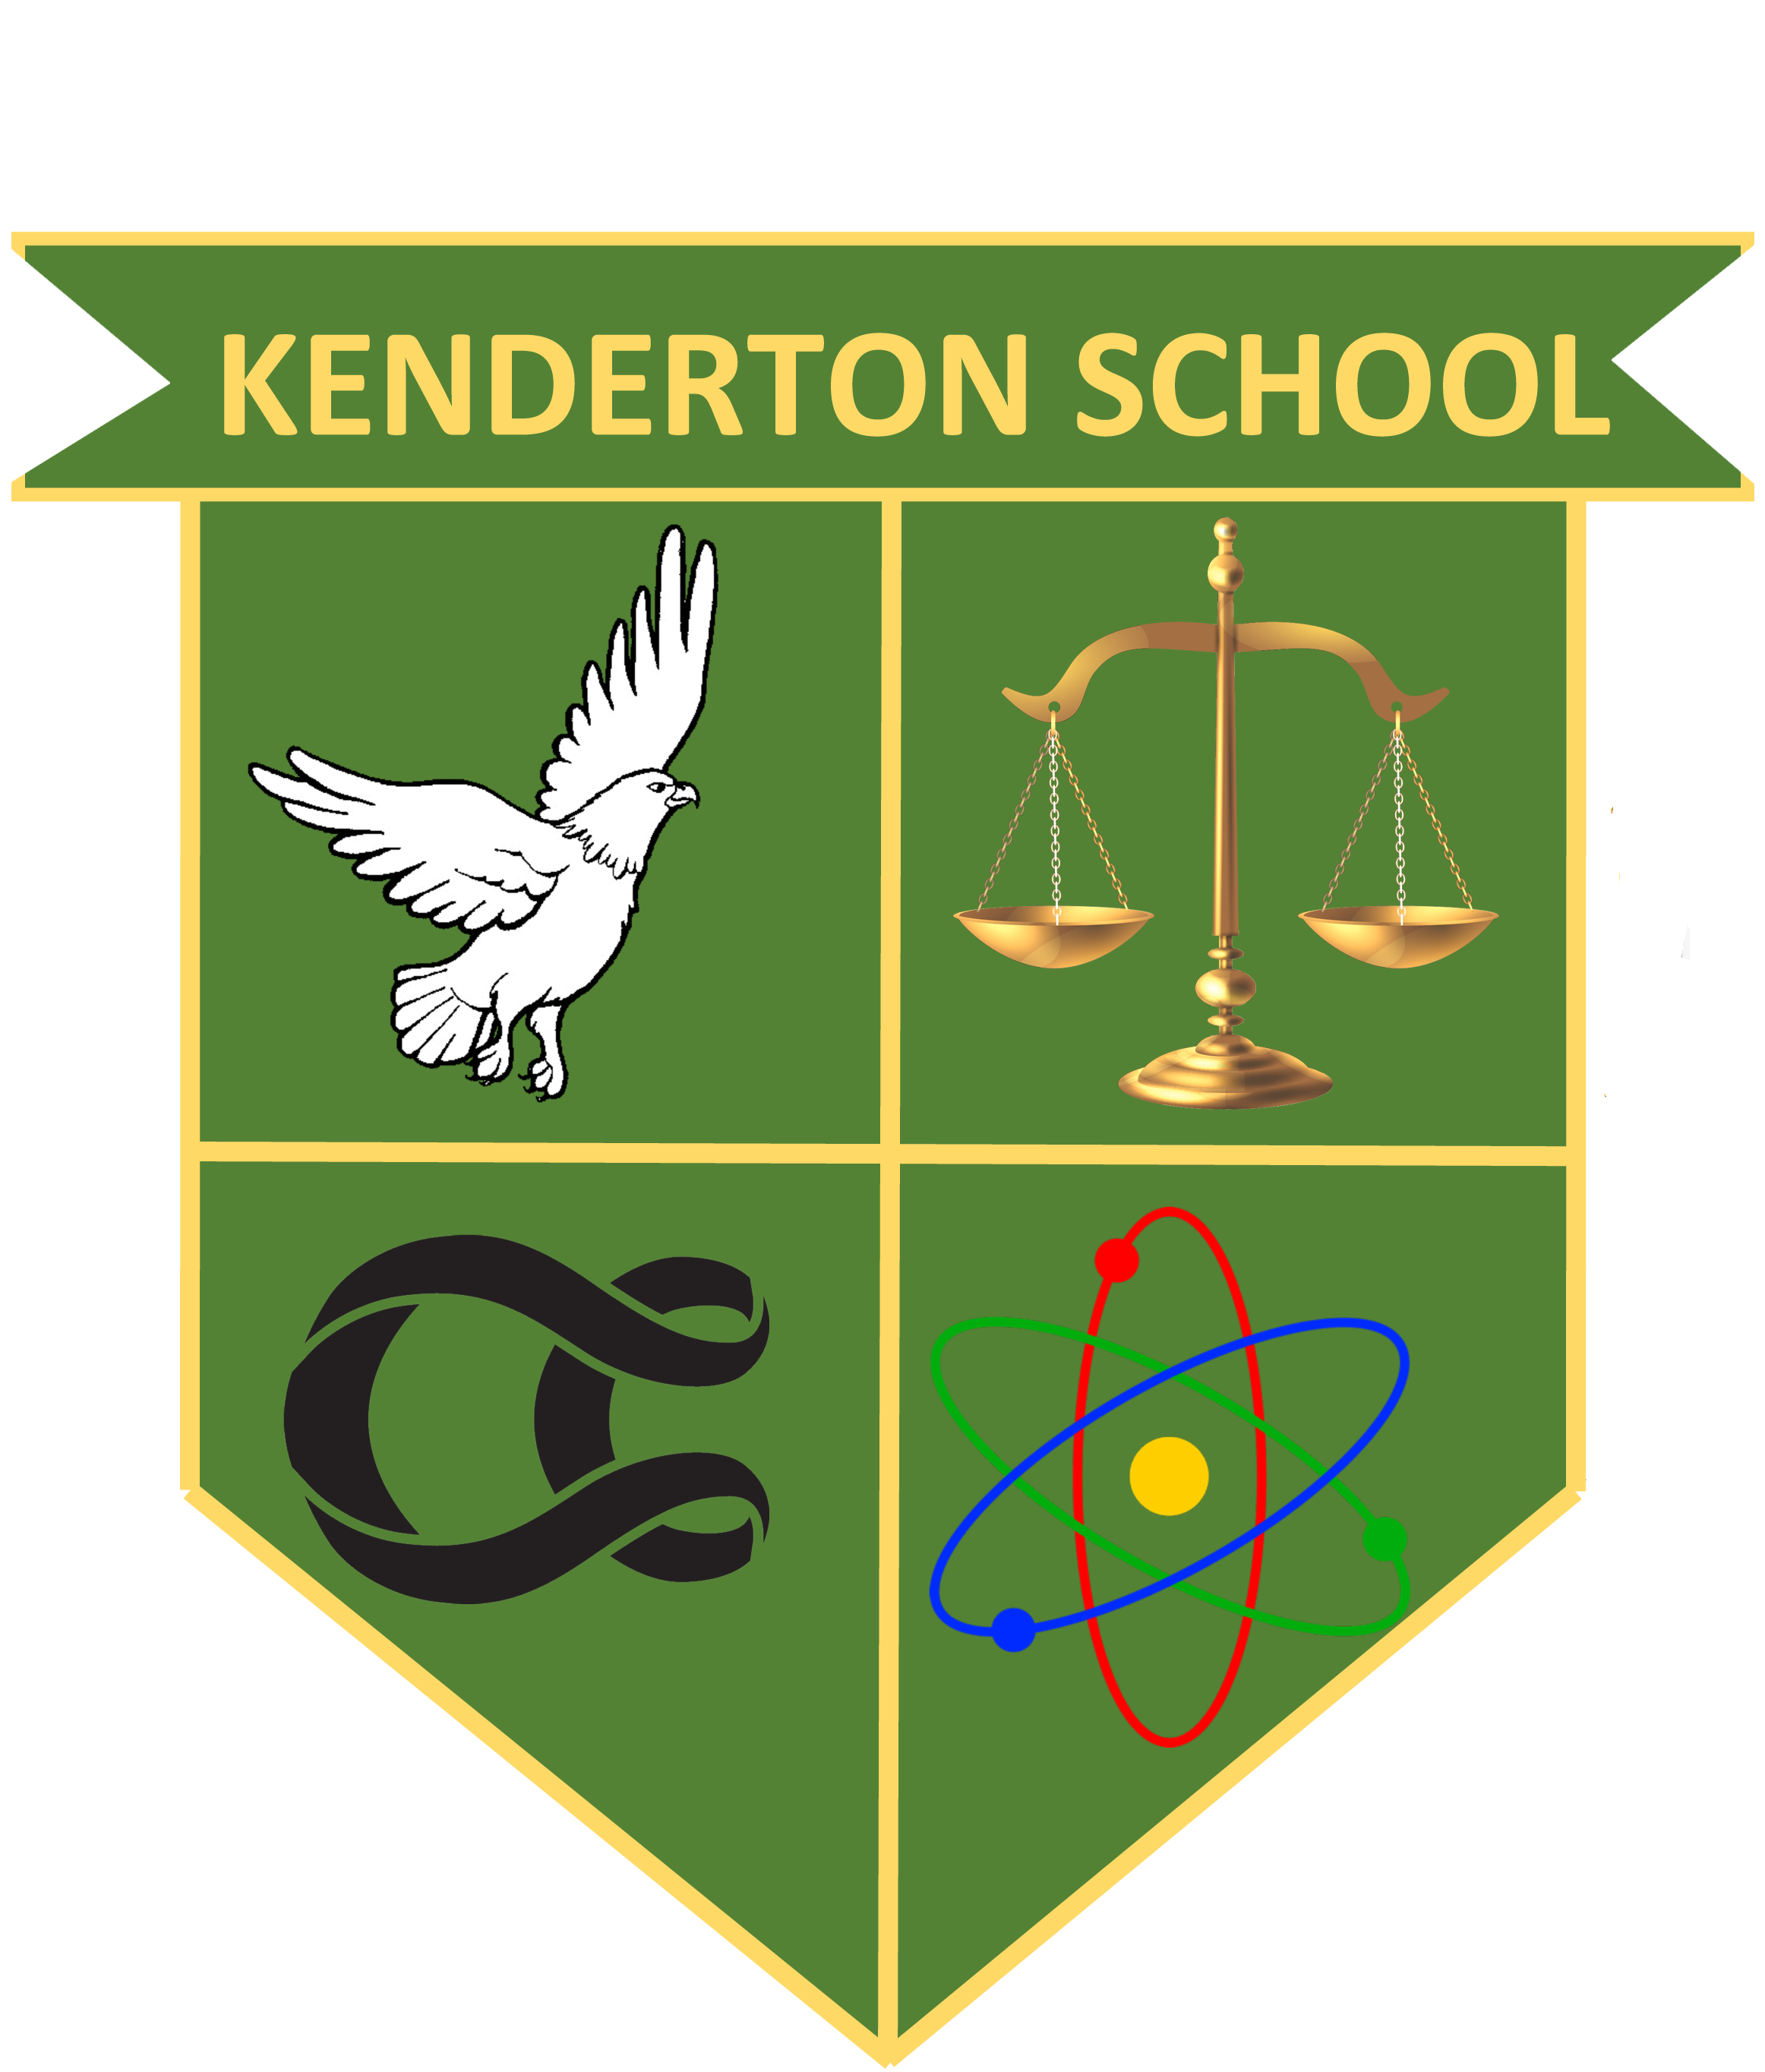 Kenderton Elementary